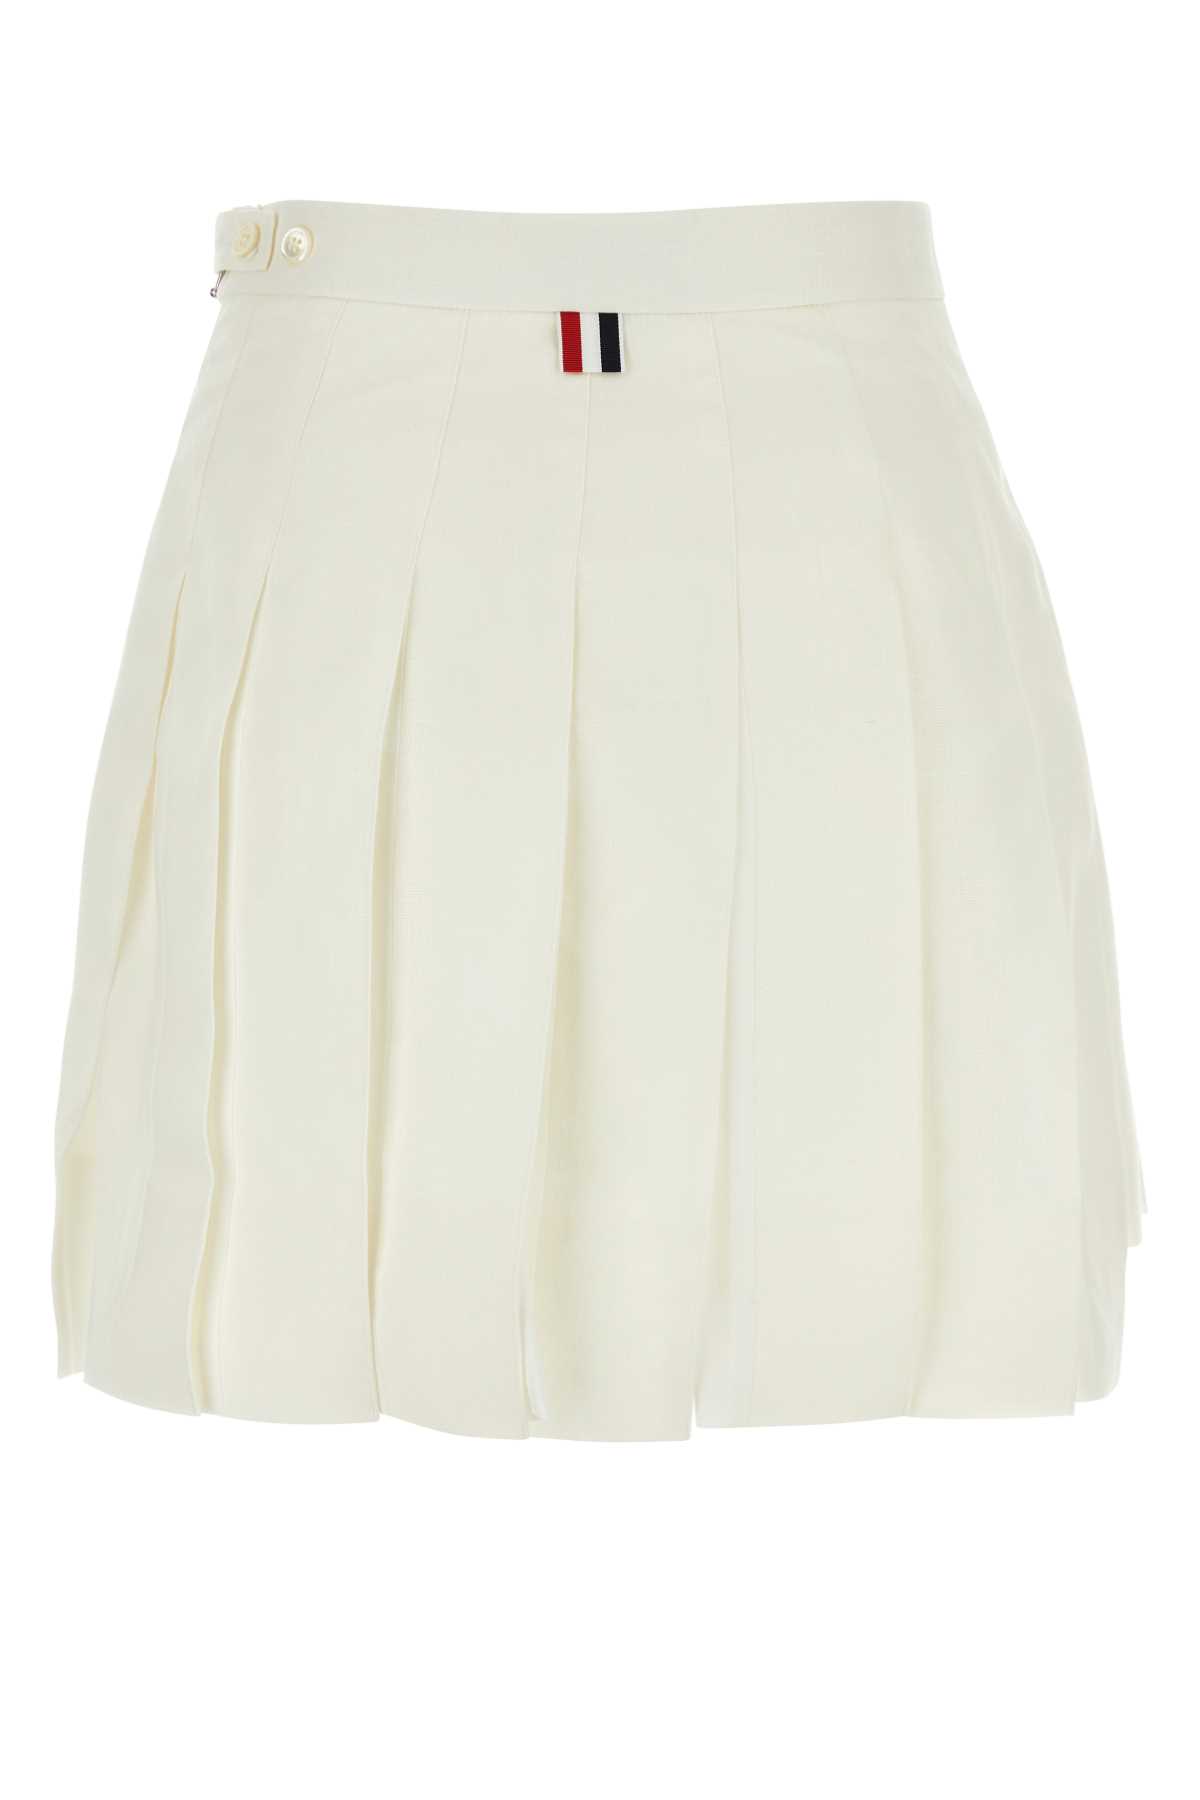 Thom Browne White Wool Skirt